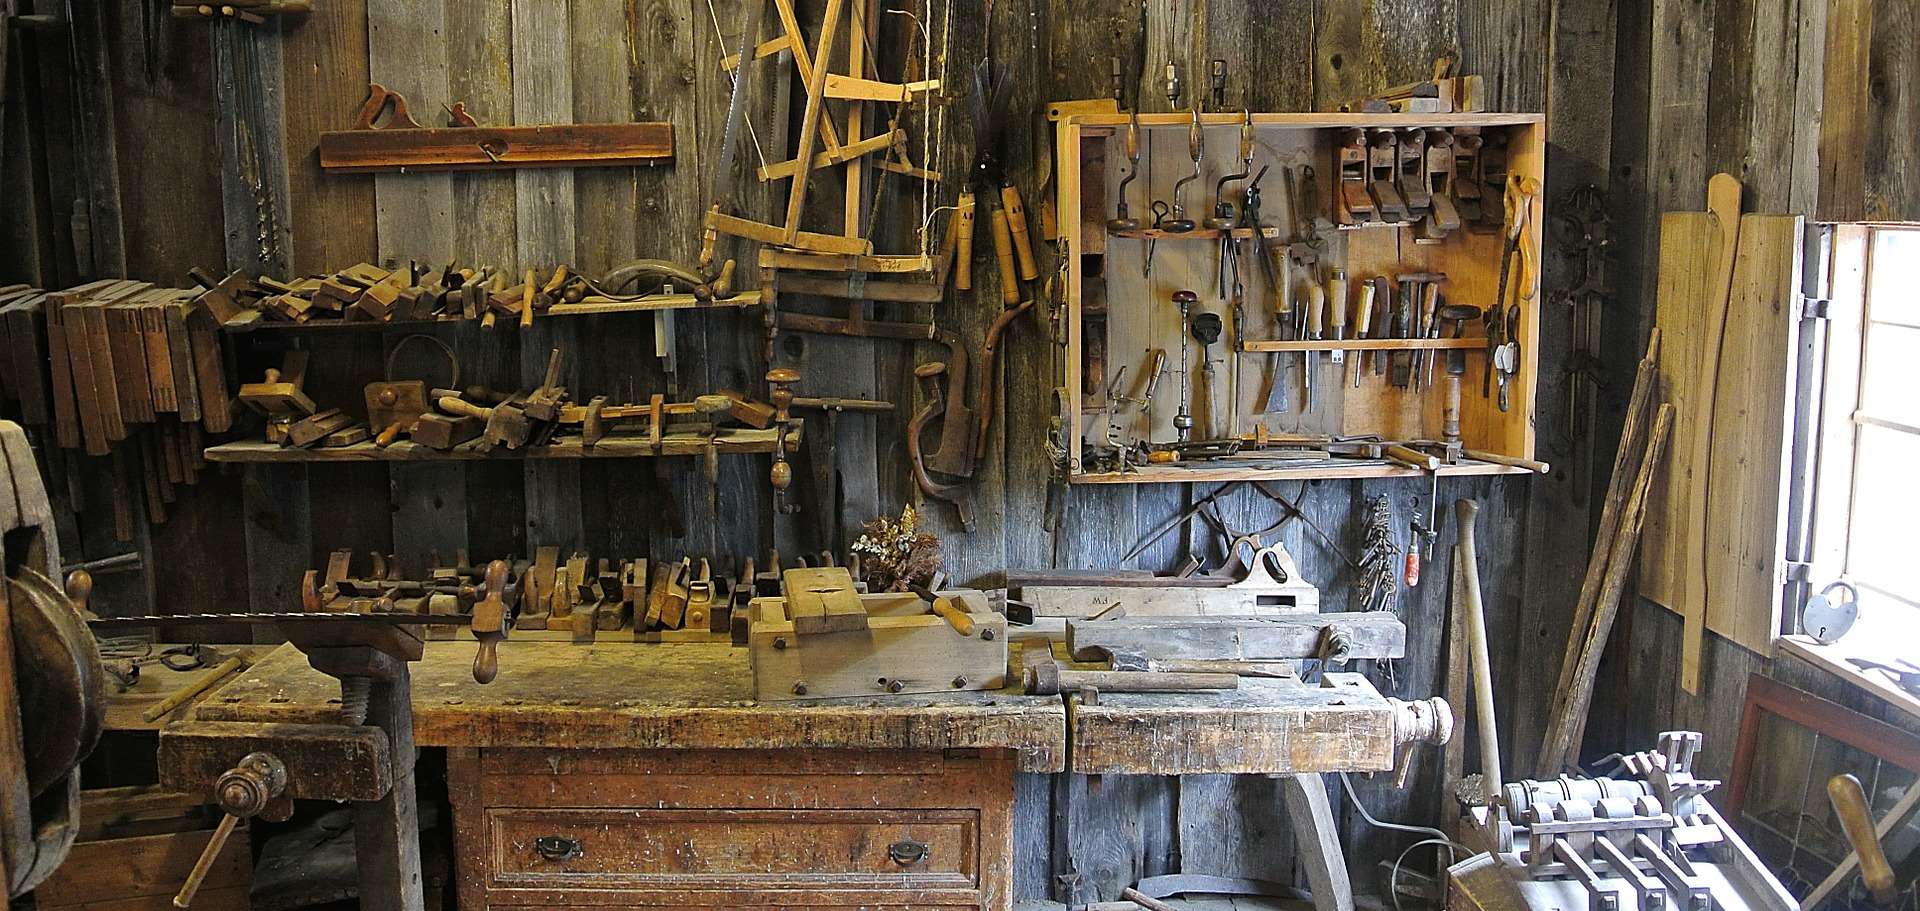 internal image showing wood working equipment